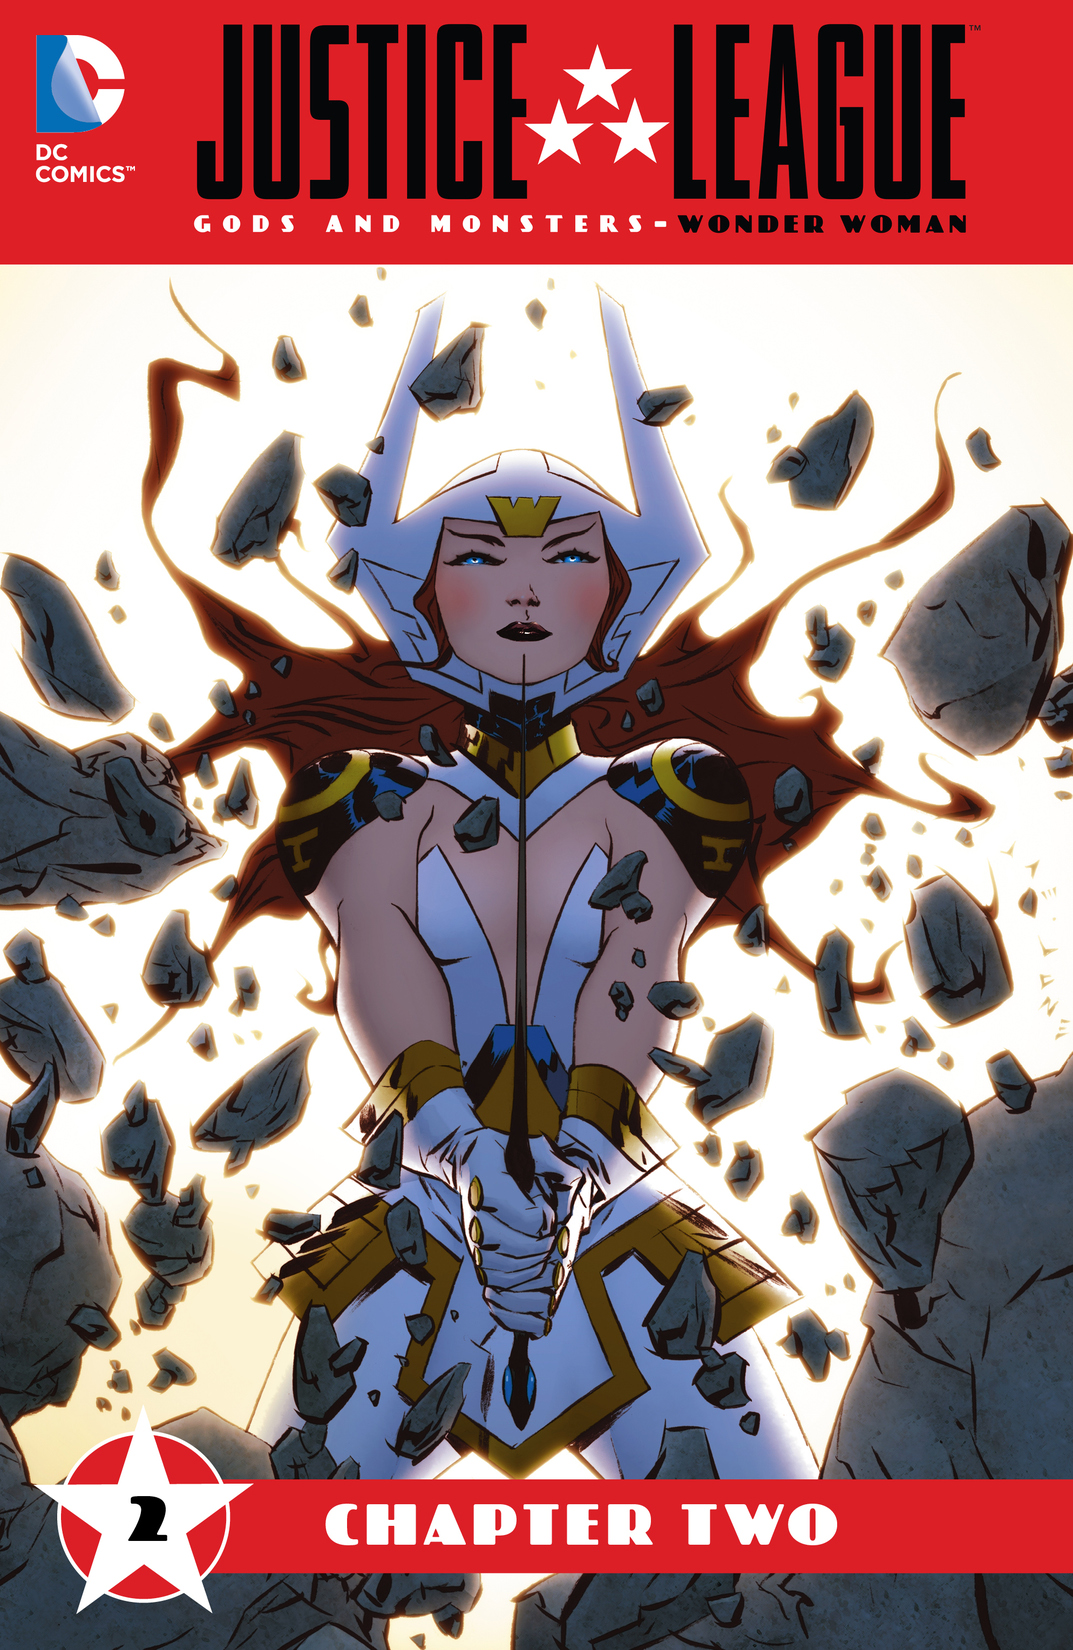 Justice League: Gods & Monsters WONDER WOMAN #2 preview images